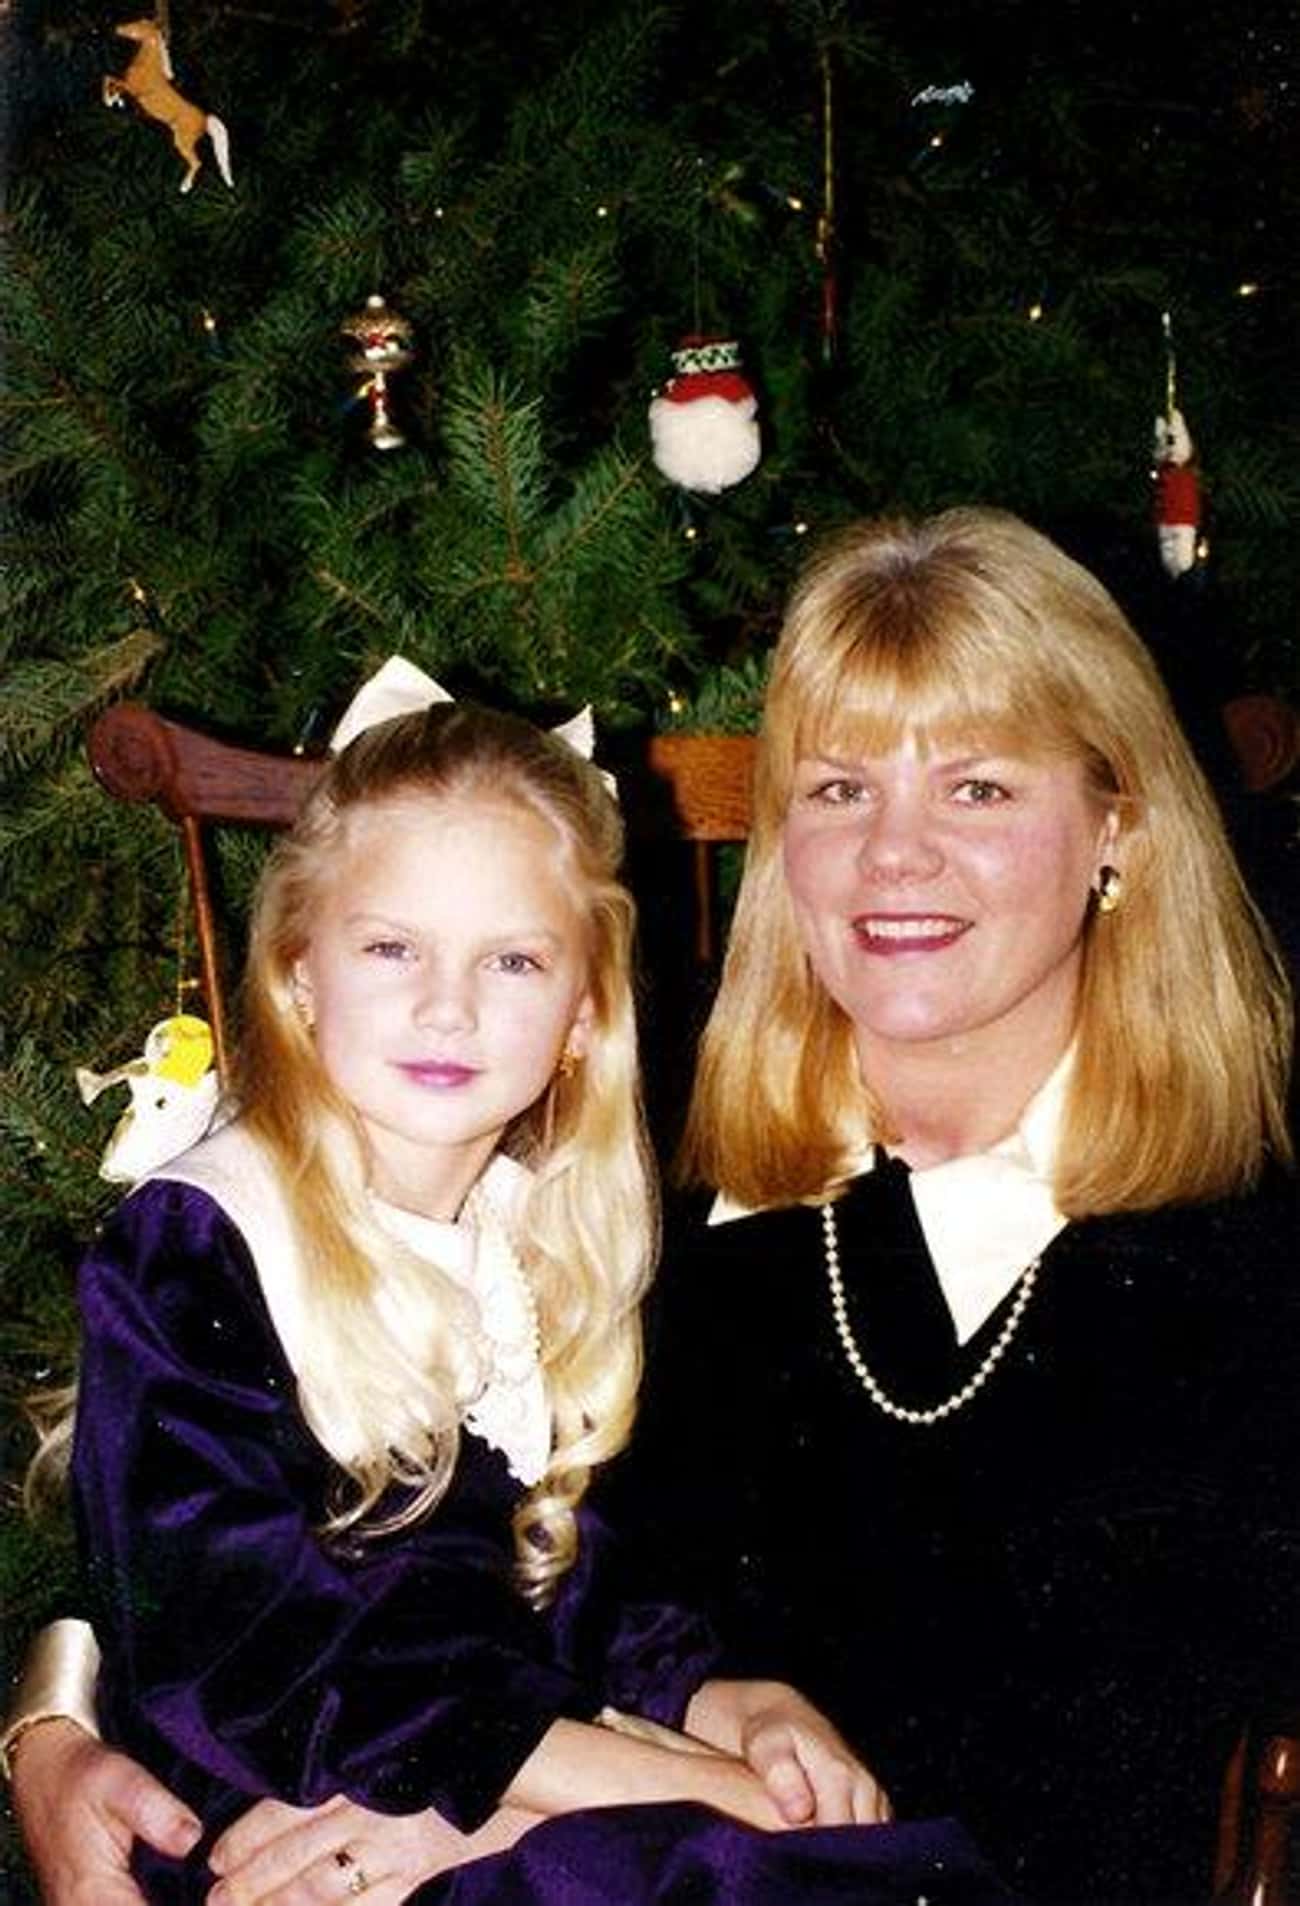 Young Taylor Swift at Christmas